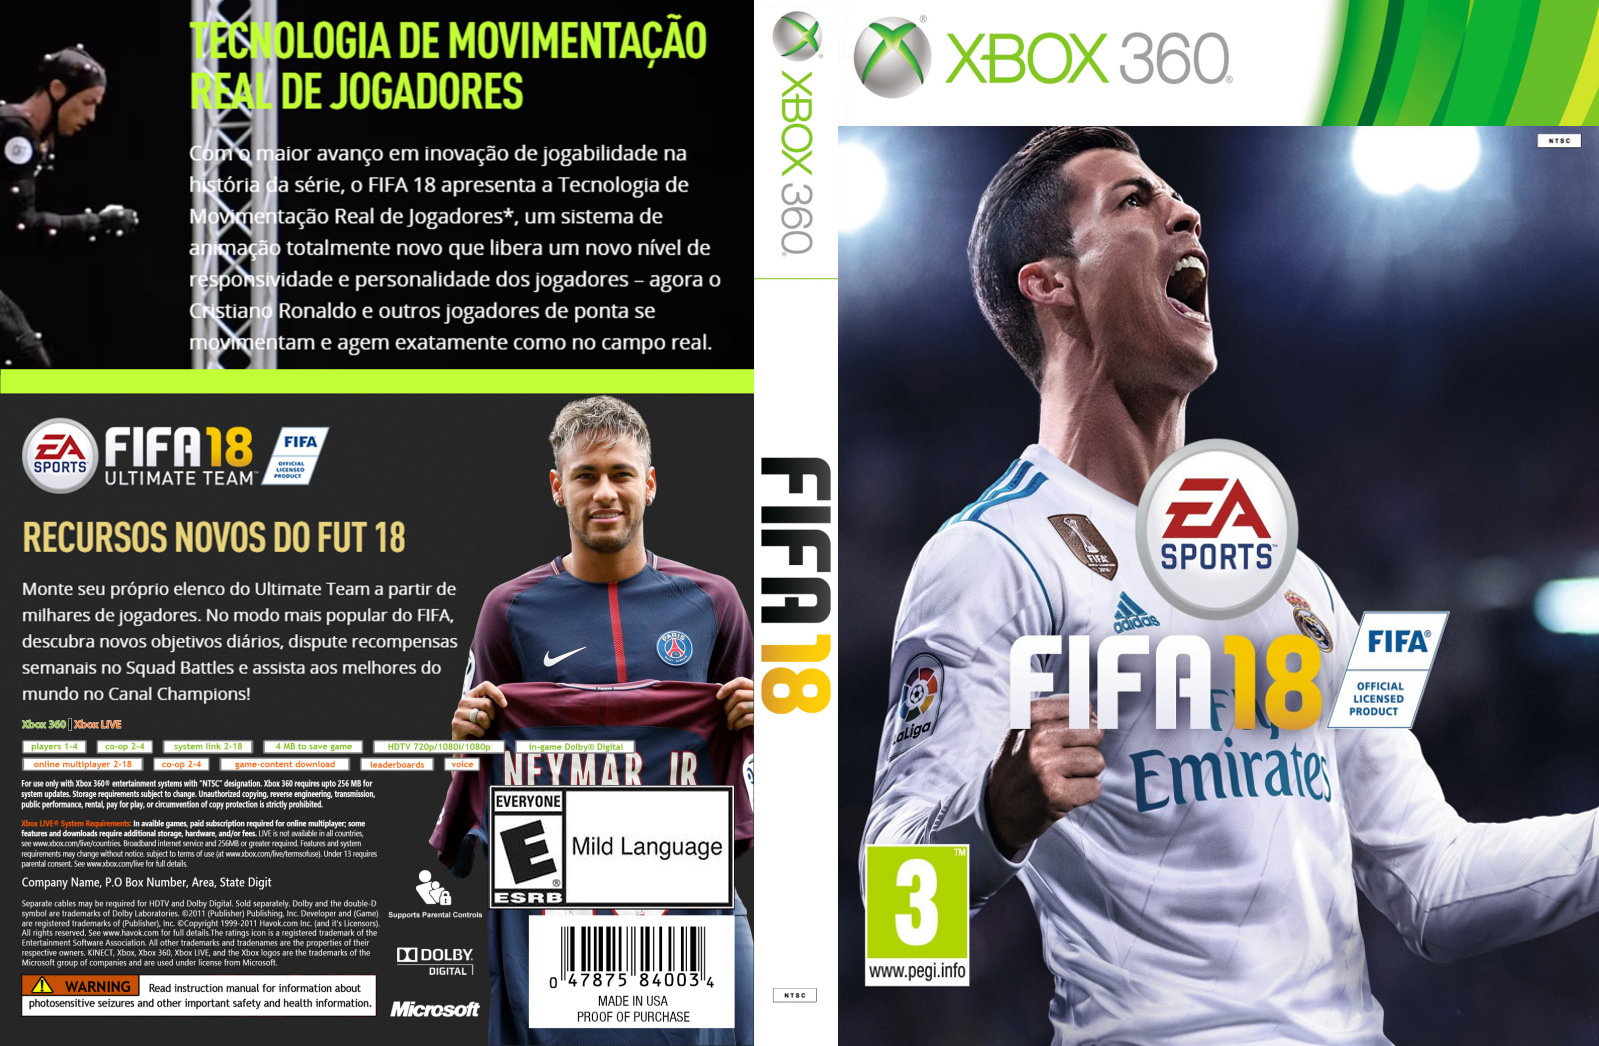 Fifa freeboot. Обложка ФИФА 19 Xbox 360. FIFA 18 Xbox 360 обложка. ФИФА 2018 хбокс 360. Обложка фифы 18 иксбокс 360.